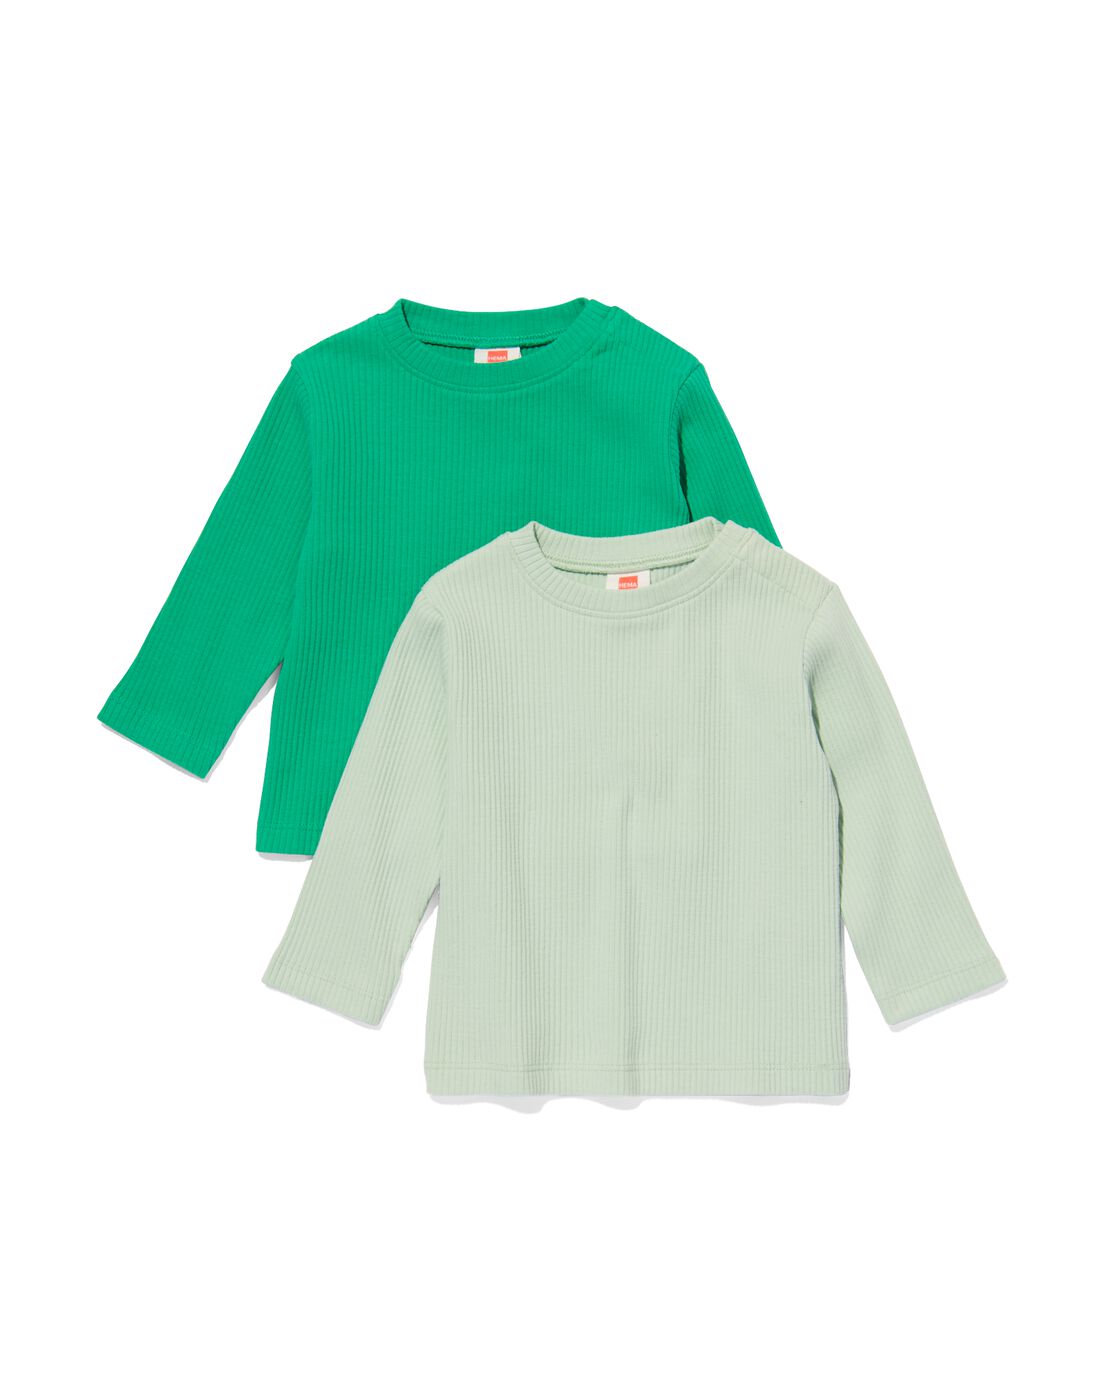 HEMA Baby T-shirts Rib Biologisch Katoen 2 Stuks Groen (groen)